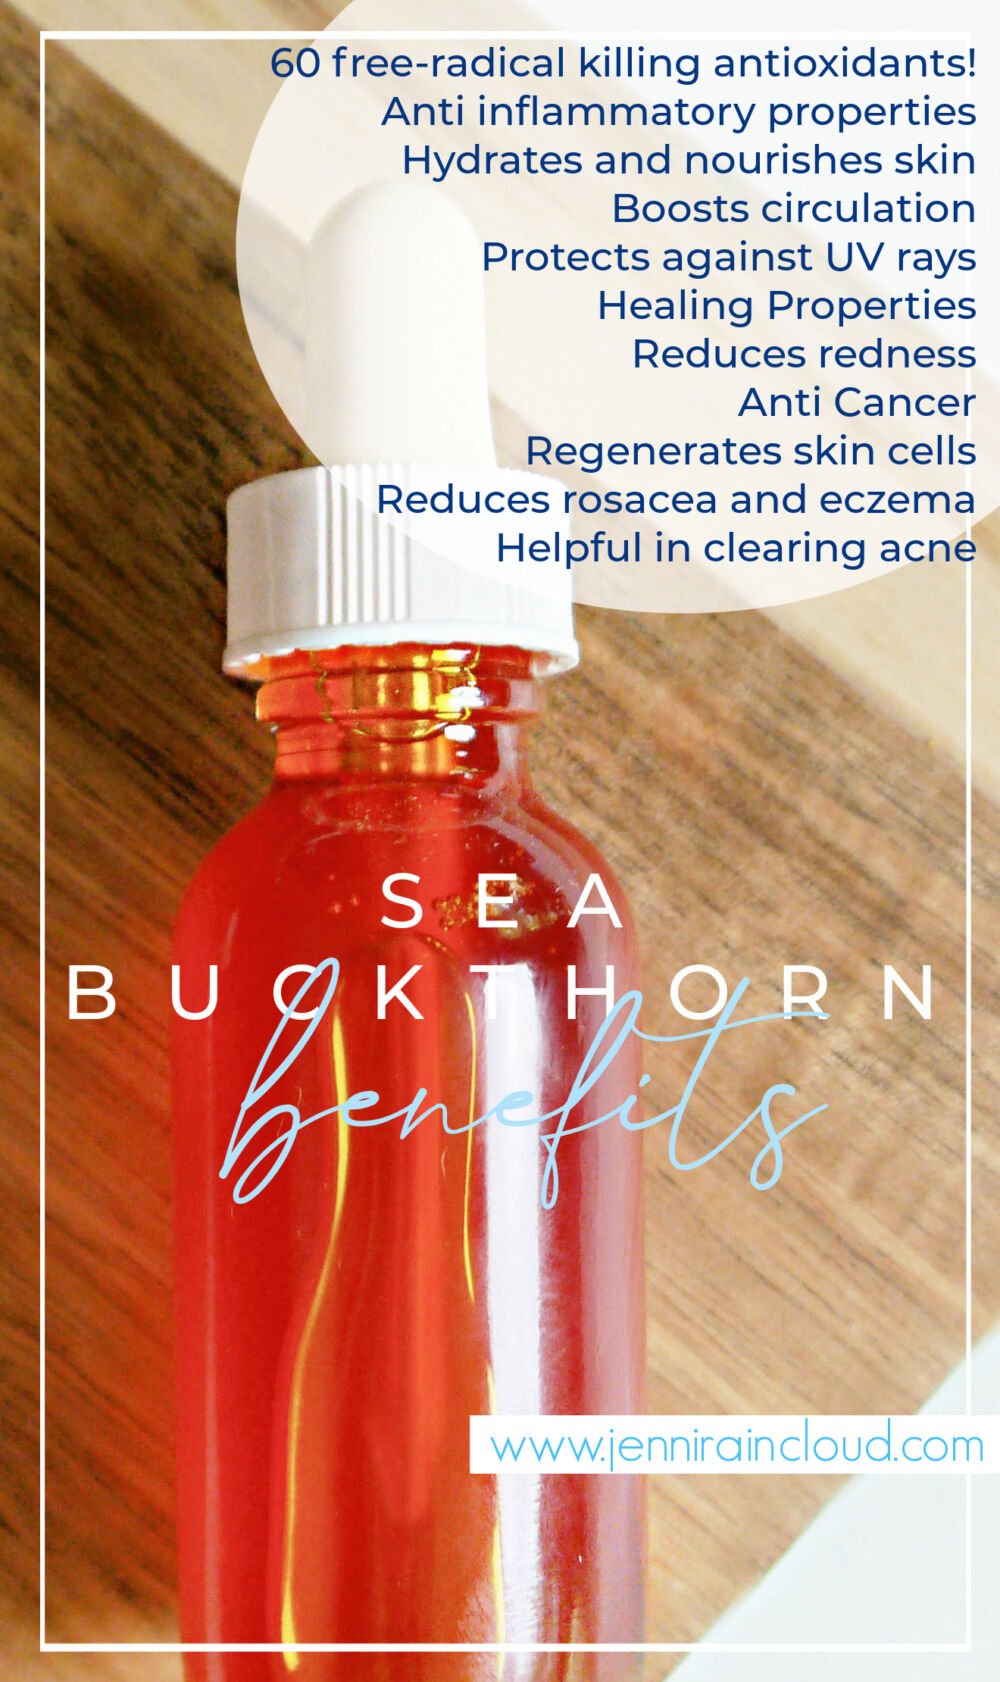 Sea Buckthorn Oil Skin Benefits Pinterest